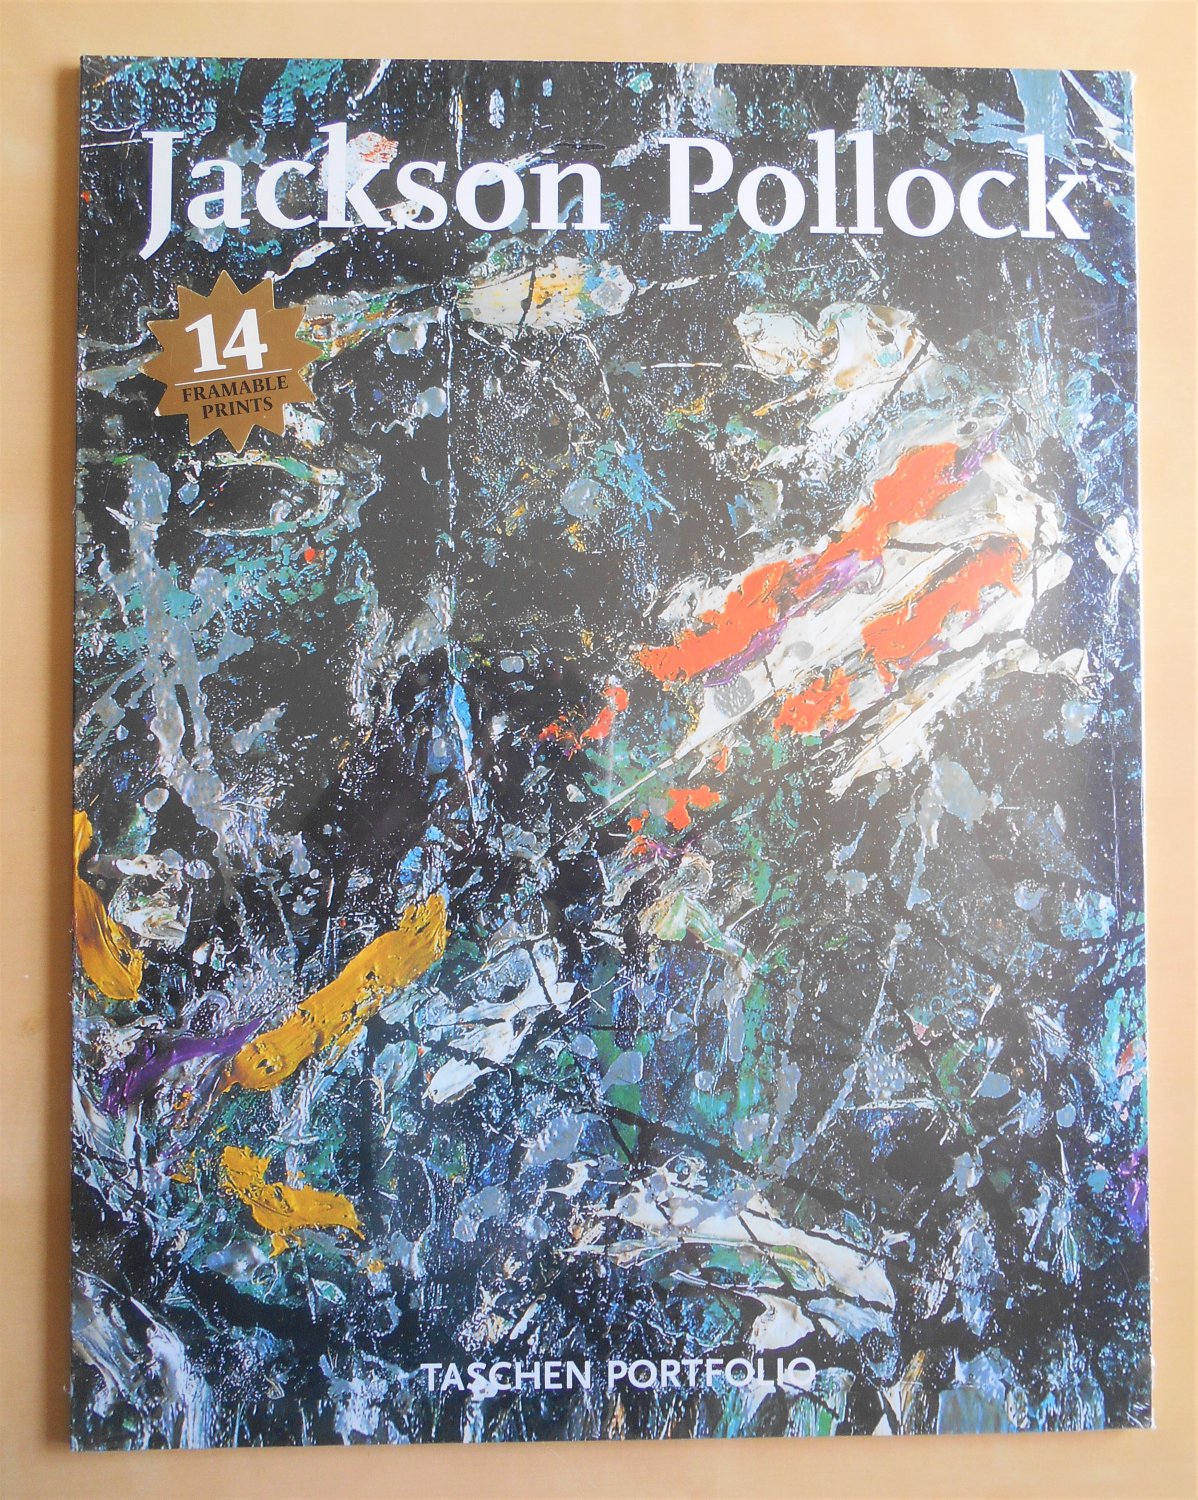 Jackson Pollock 14 Framable Prints Taschen Portfolio Factory Sealed